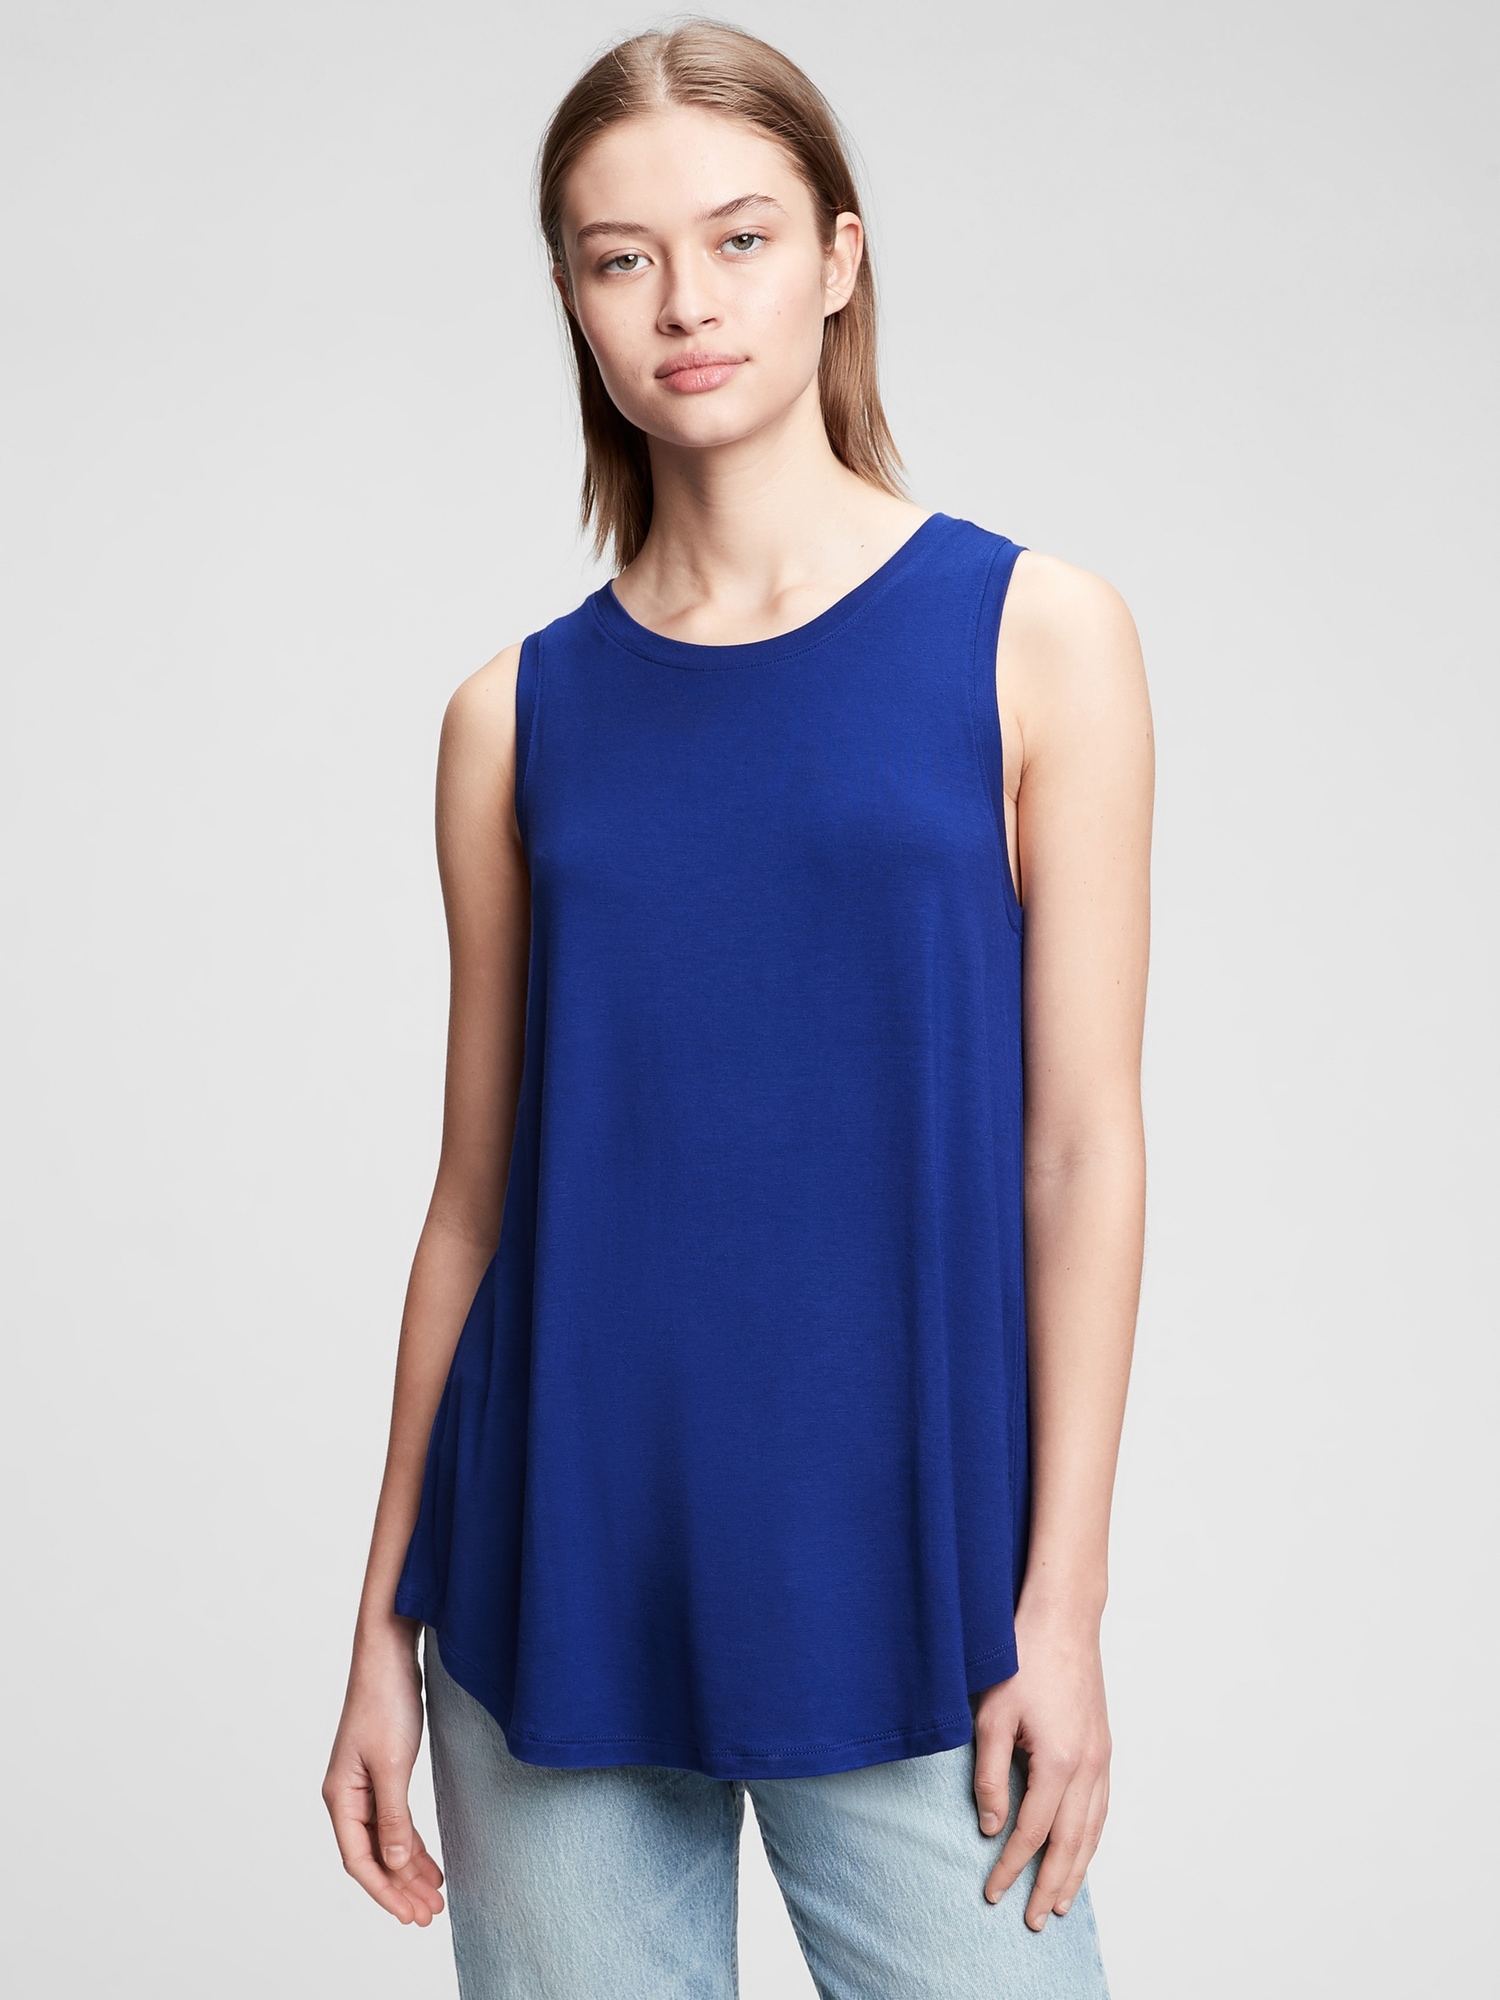 Gap Factory Women's Luxe Sleeveless Top, Select Size Medium (Capital Blue)